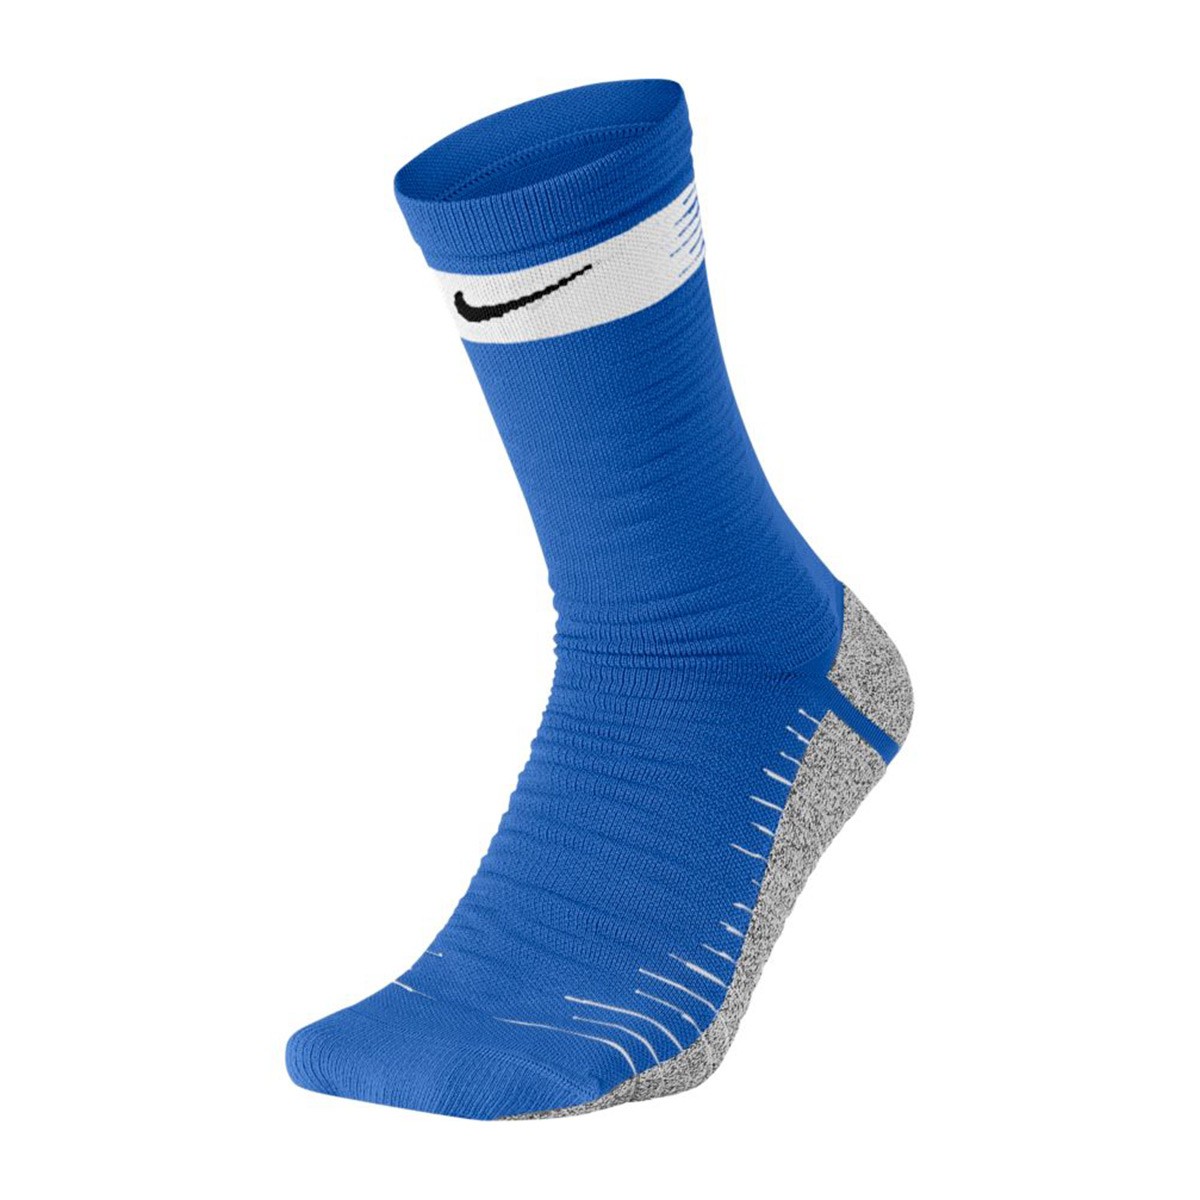 Socks Nike NikeGrip Strike Light Royal 